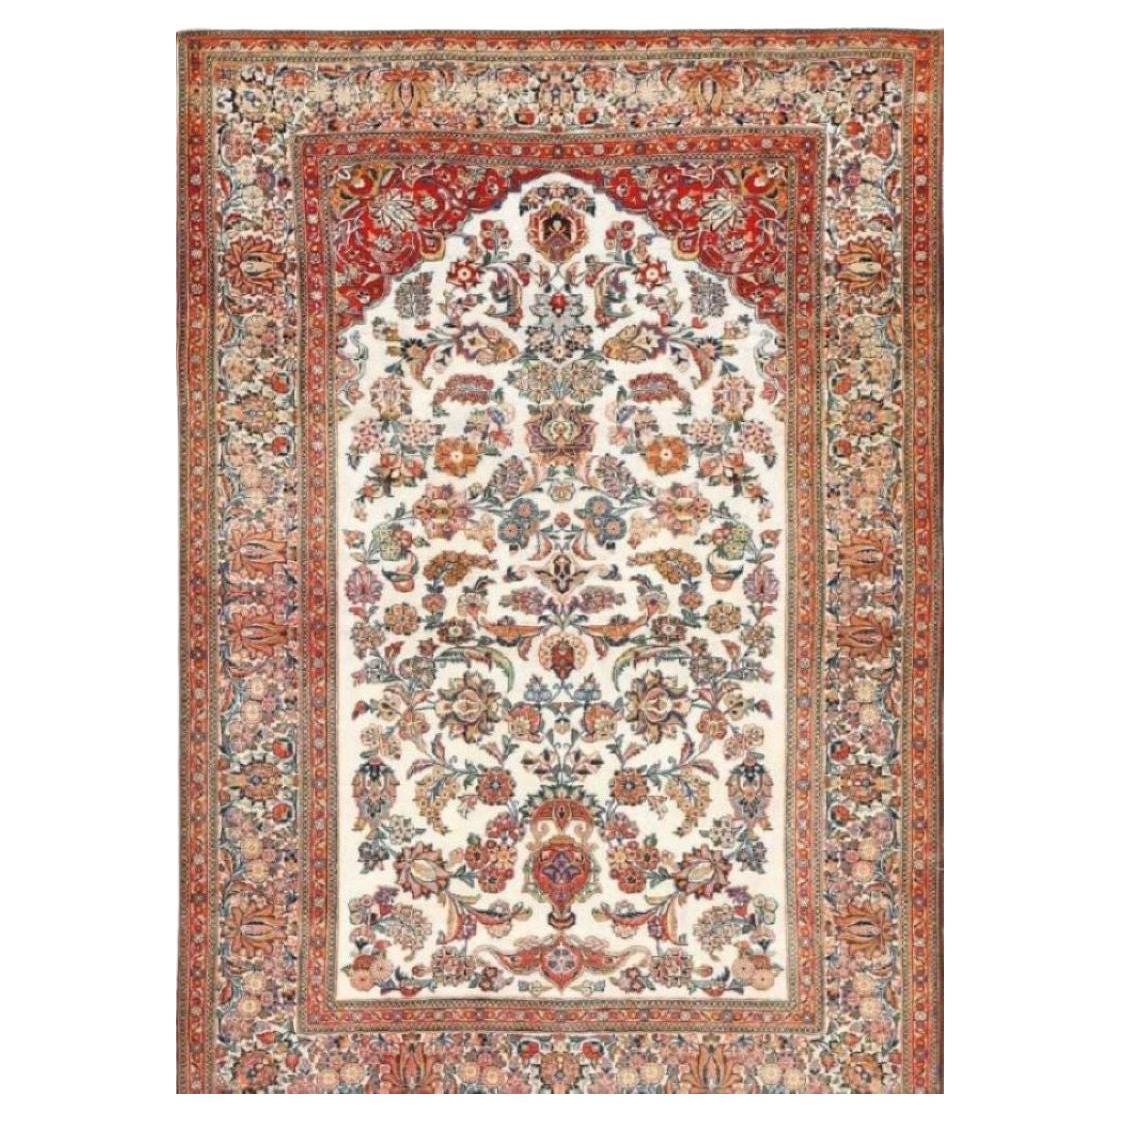 Antique Persian Wool and Silk Prayer Design Kashan Oriental Rug